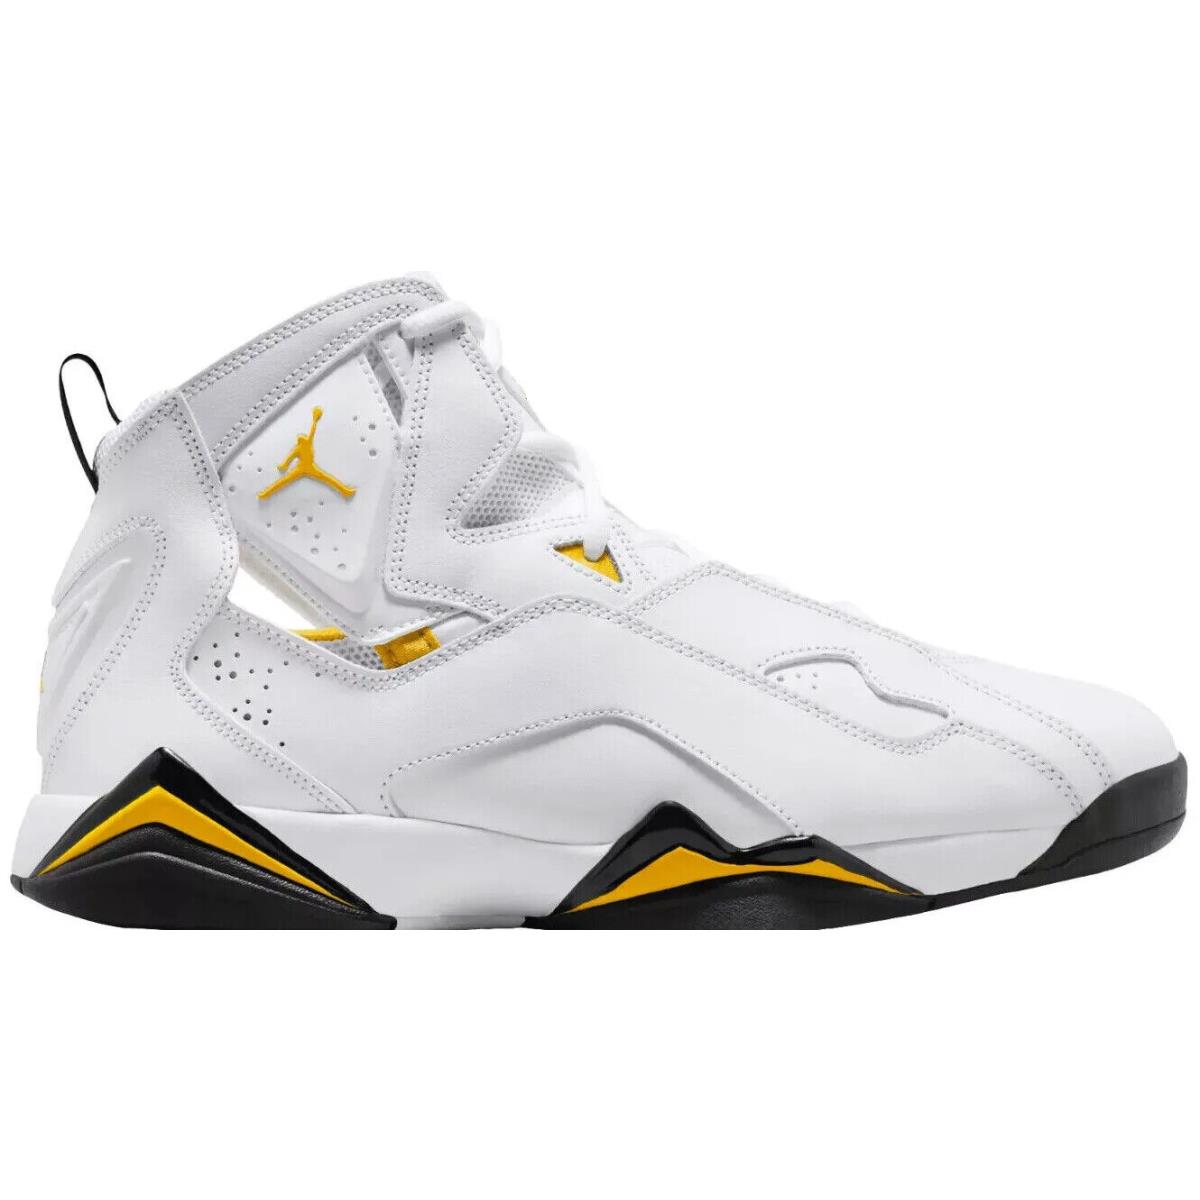 Nike Jordan True Flight Men`s Basketball Shoes All Colors US Sizes 7-14 White / Black / Yellow Ochre